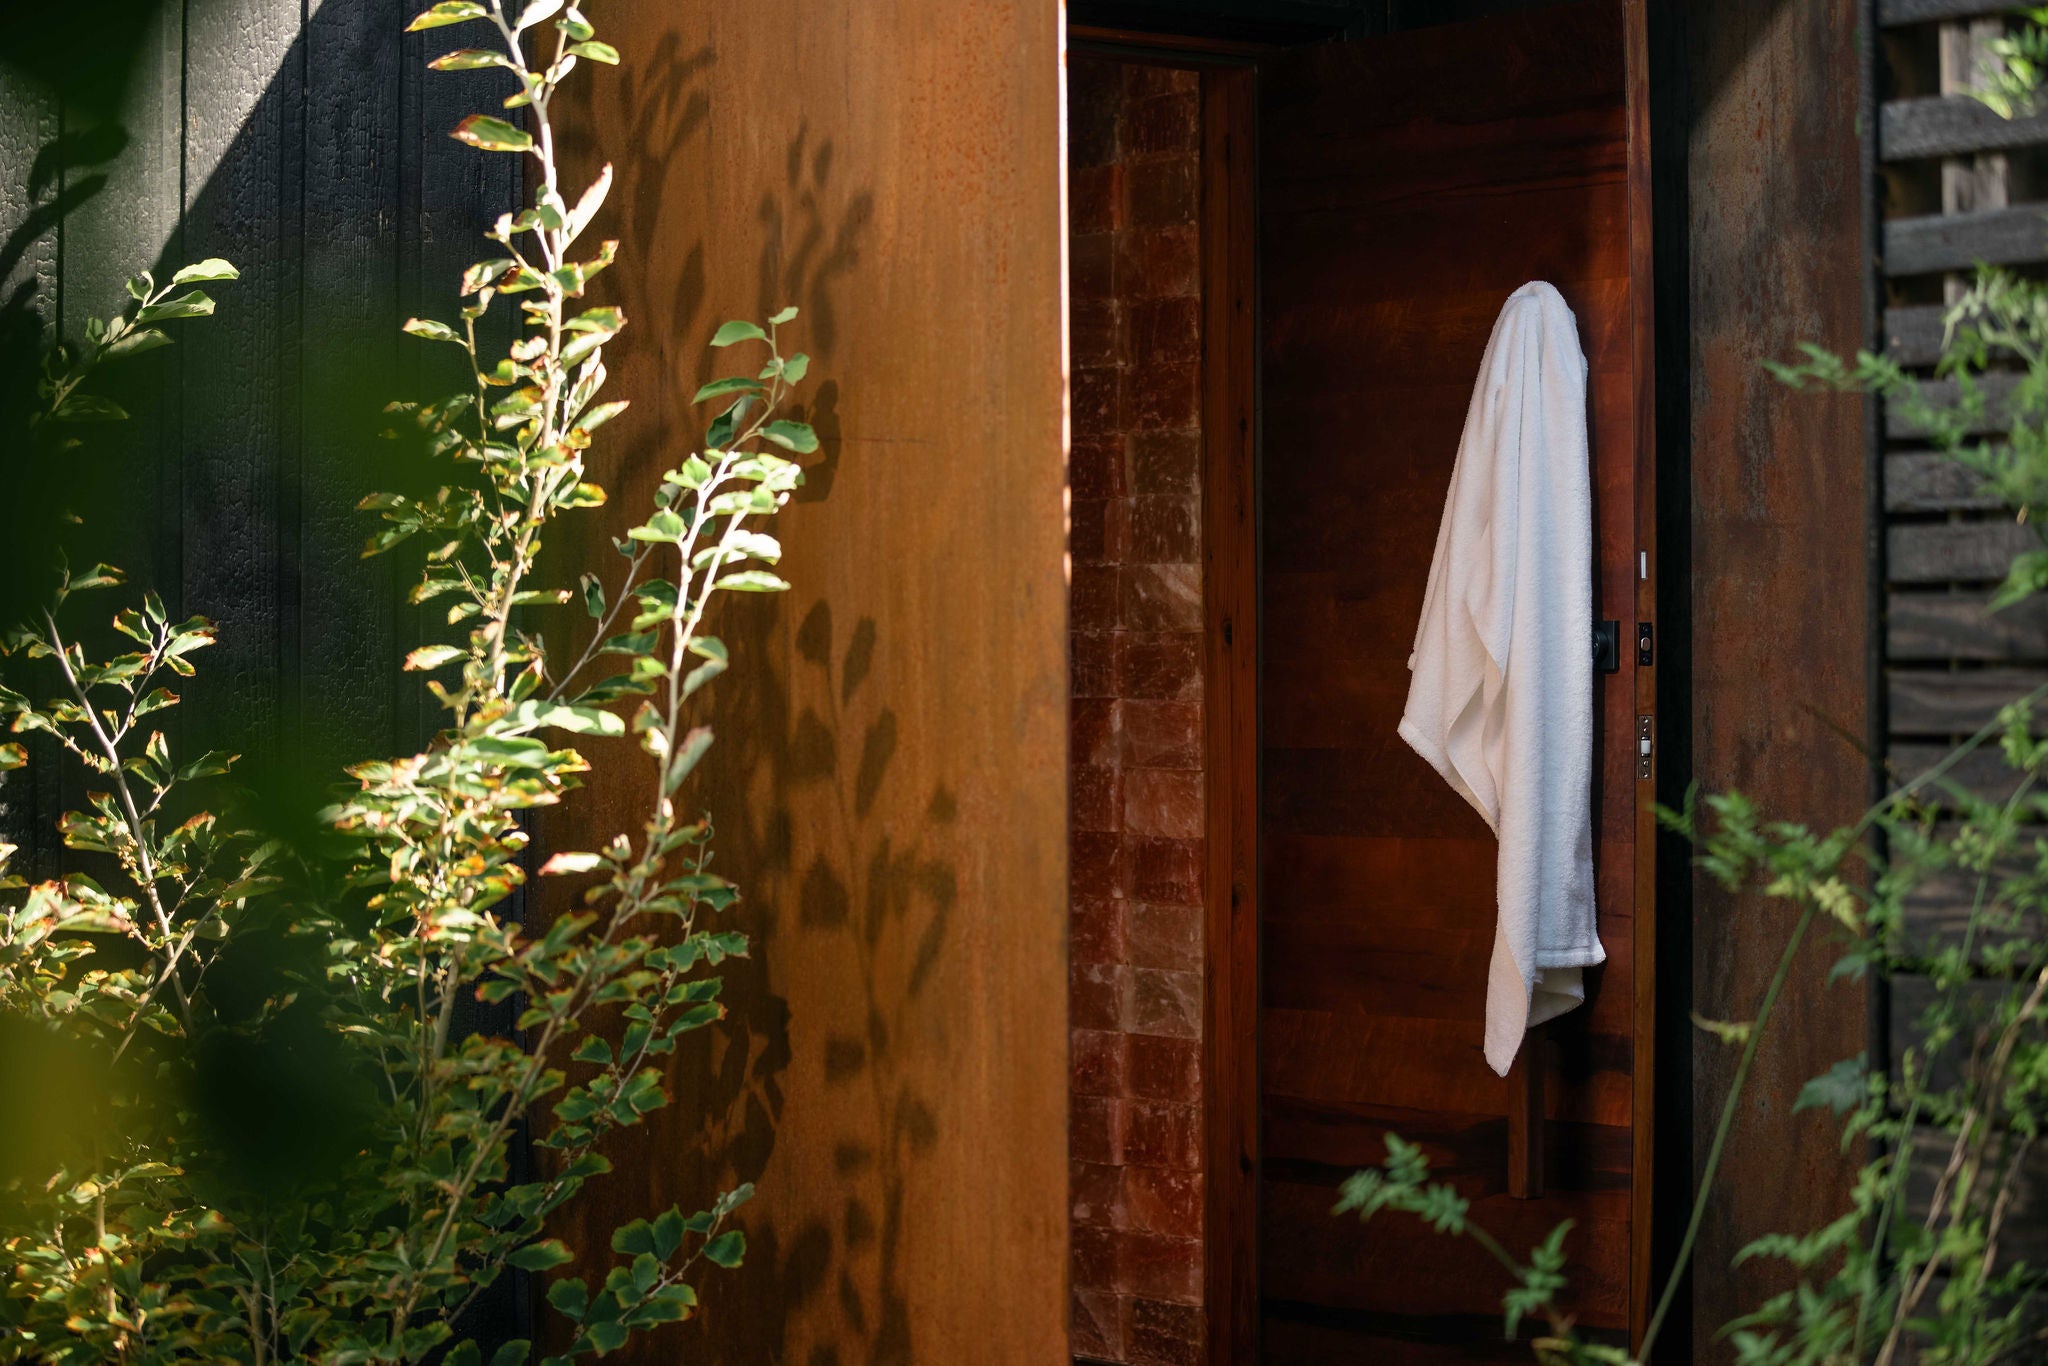 Somn Home Eco Cotton Towels - Luxury Bath Towels